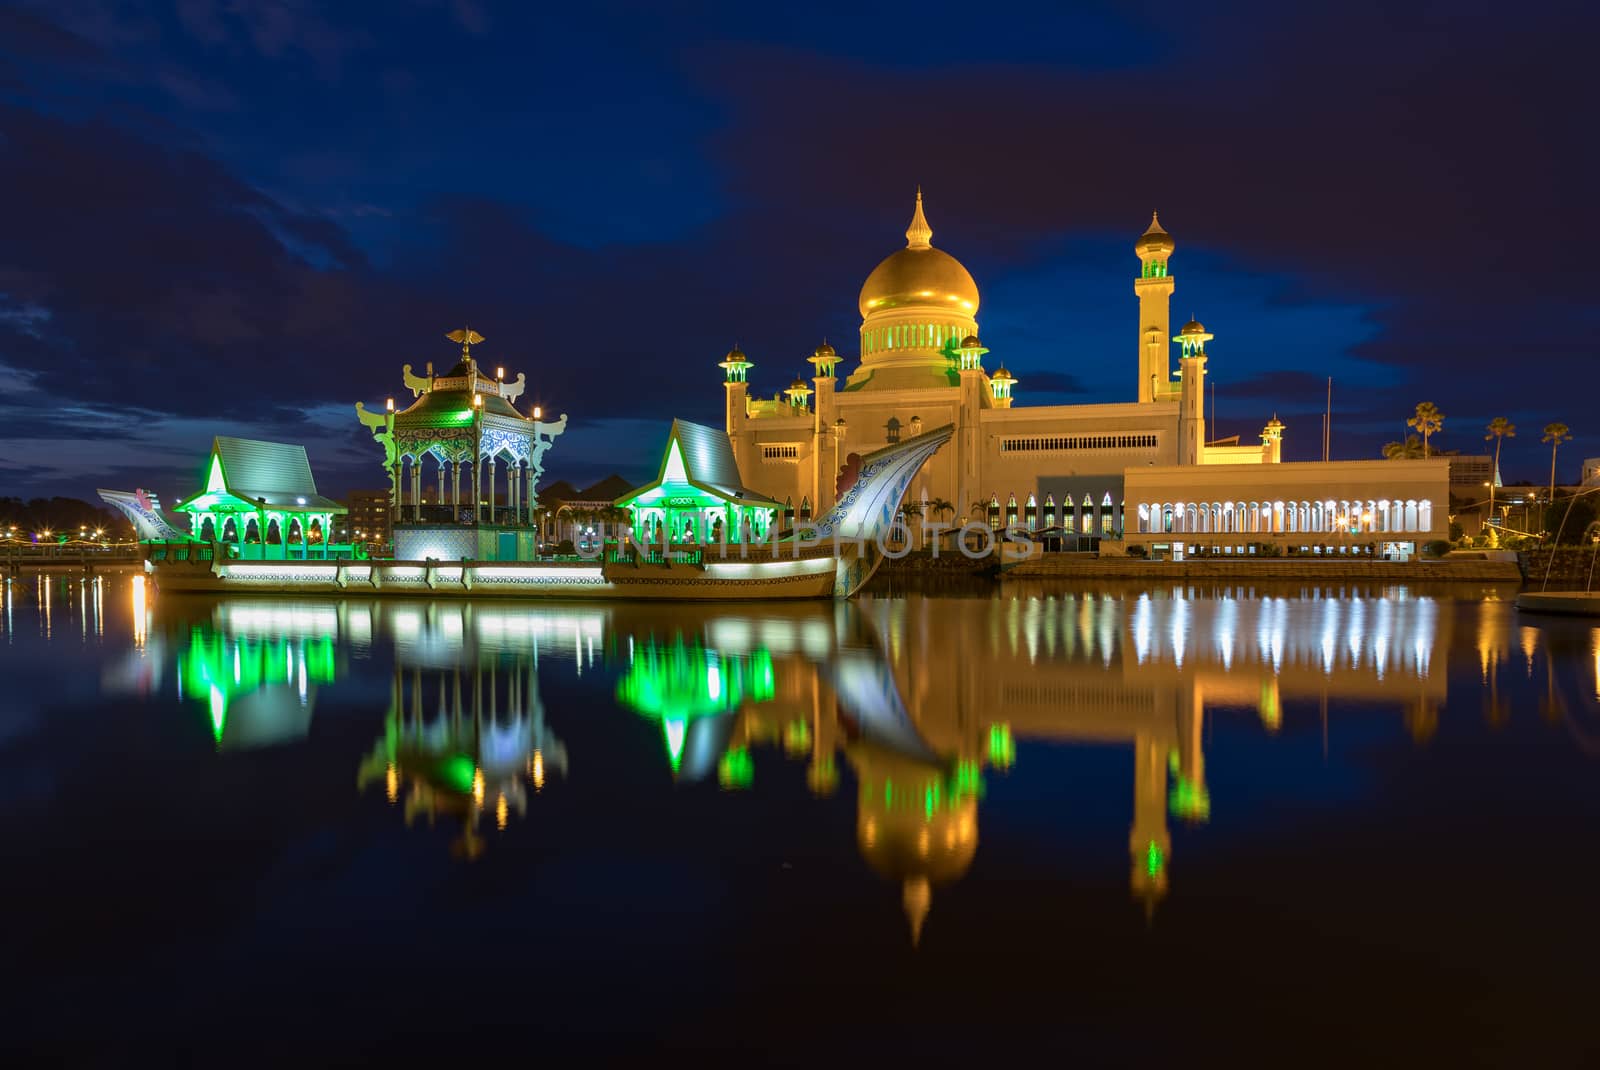 Brunei Darussalam
Bandar Seri Begawan
Sultan Omar Ali Saifuddien Mosque
March 15, 2018
One of Brunei's most important mosques at night